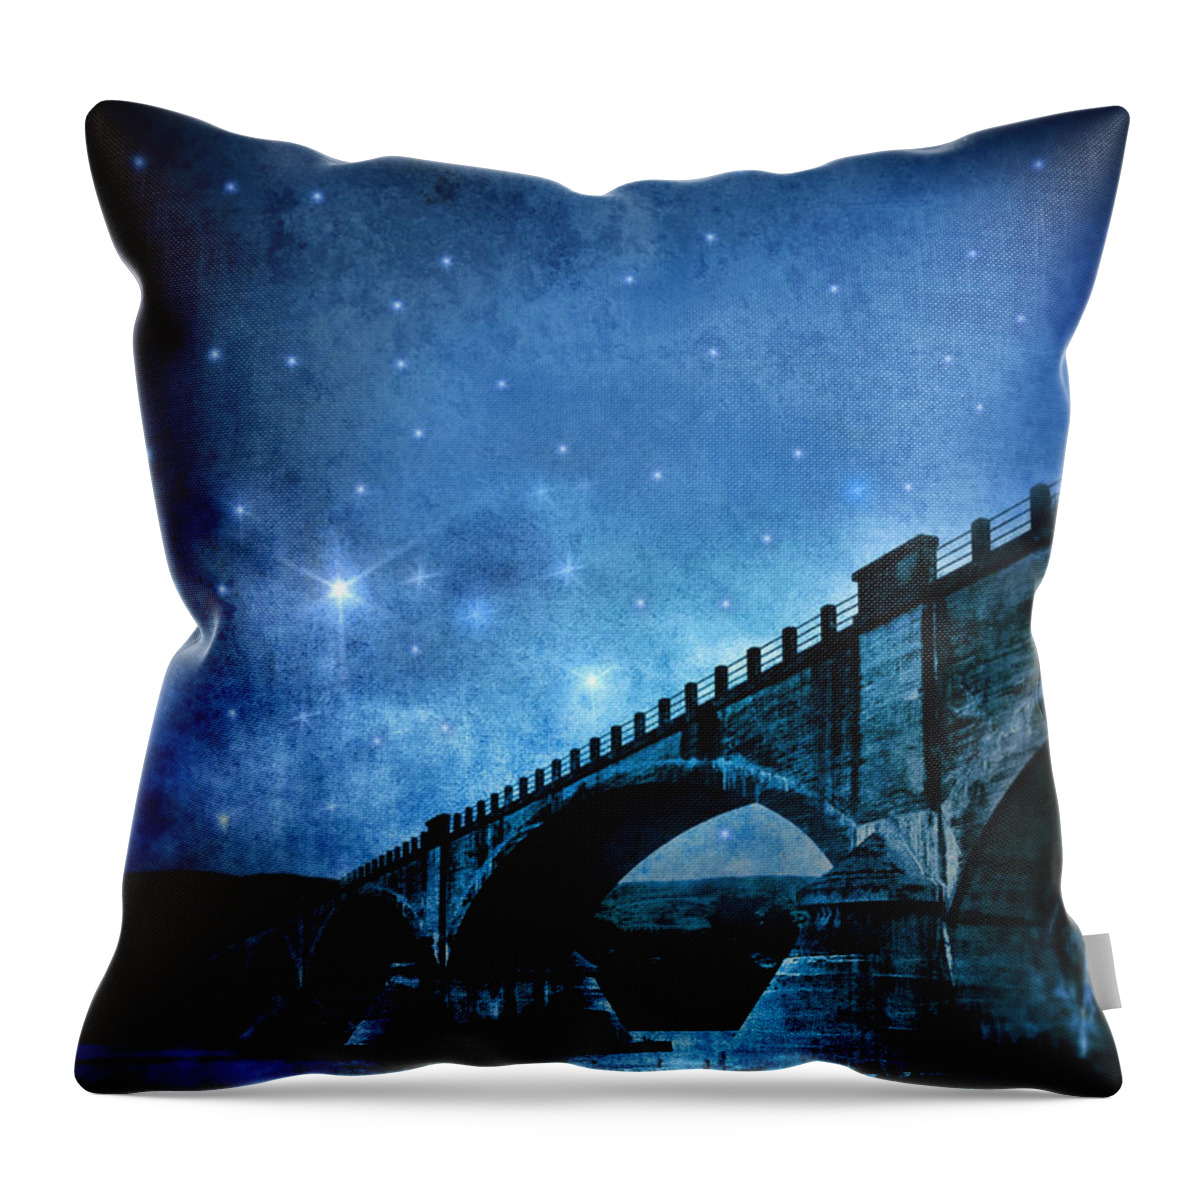 Bridge Throw Pillow featuring the photograph Old Bridge Over River by Jill Battaglia